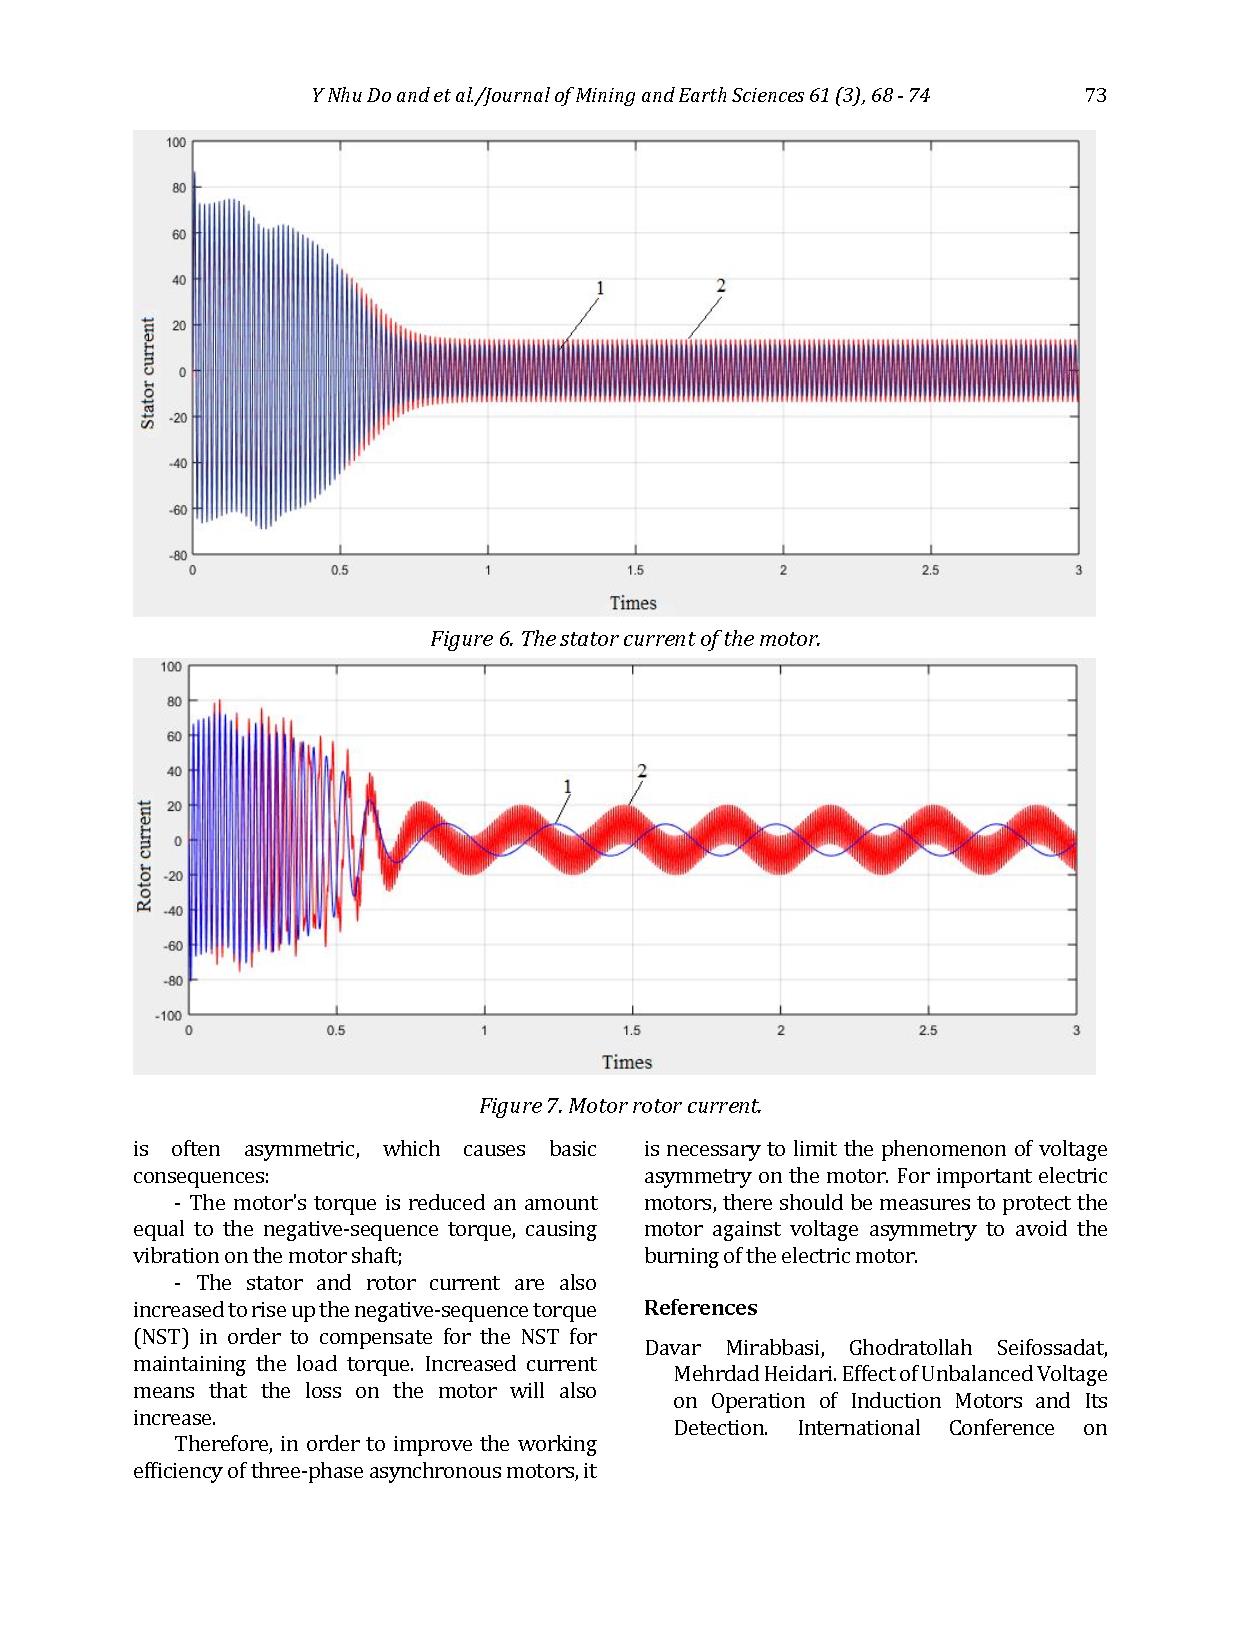 Impact of asymmetrical phenomena on asynchronous three phase motors in operation mode trang 6